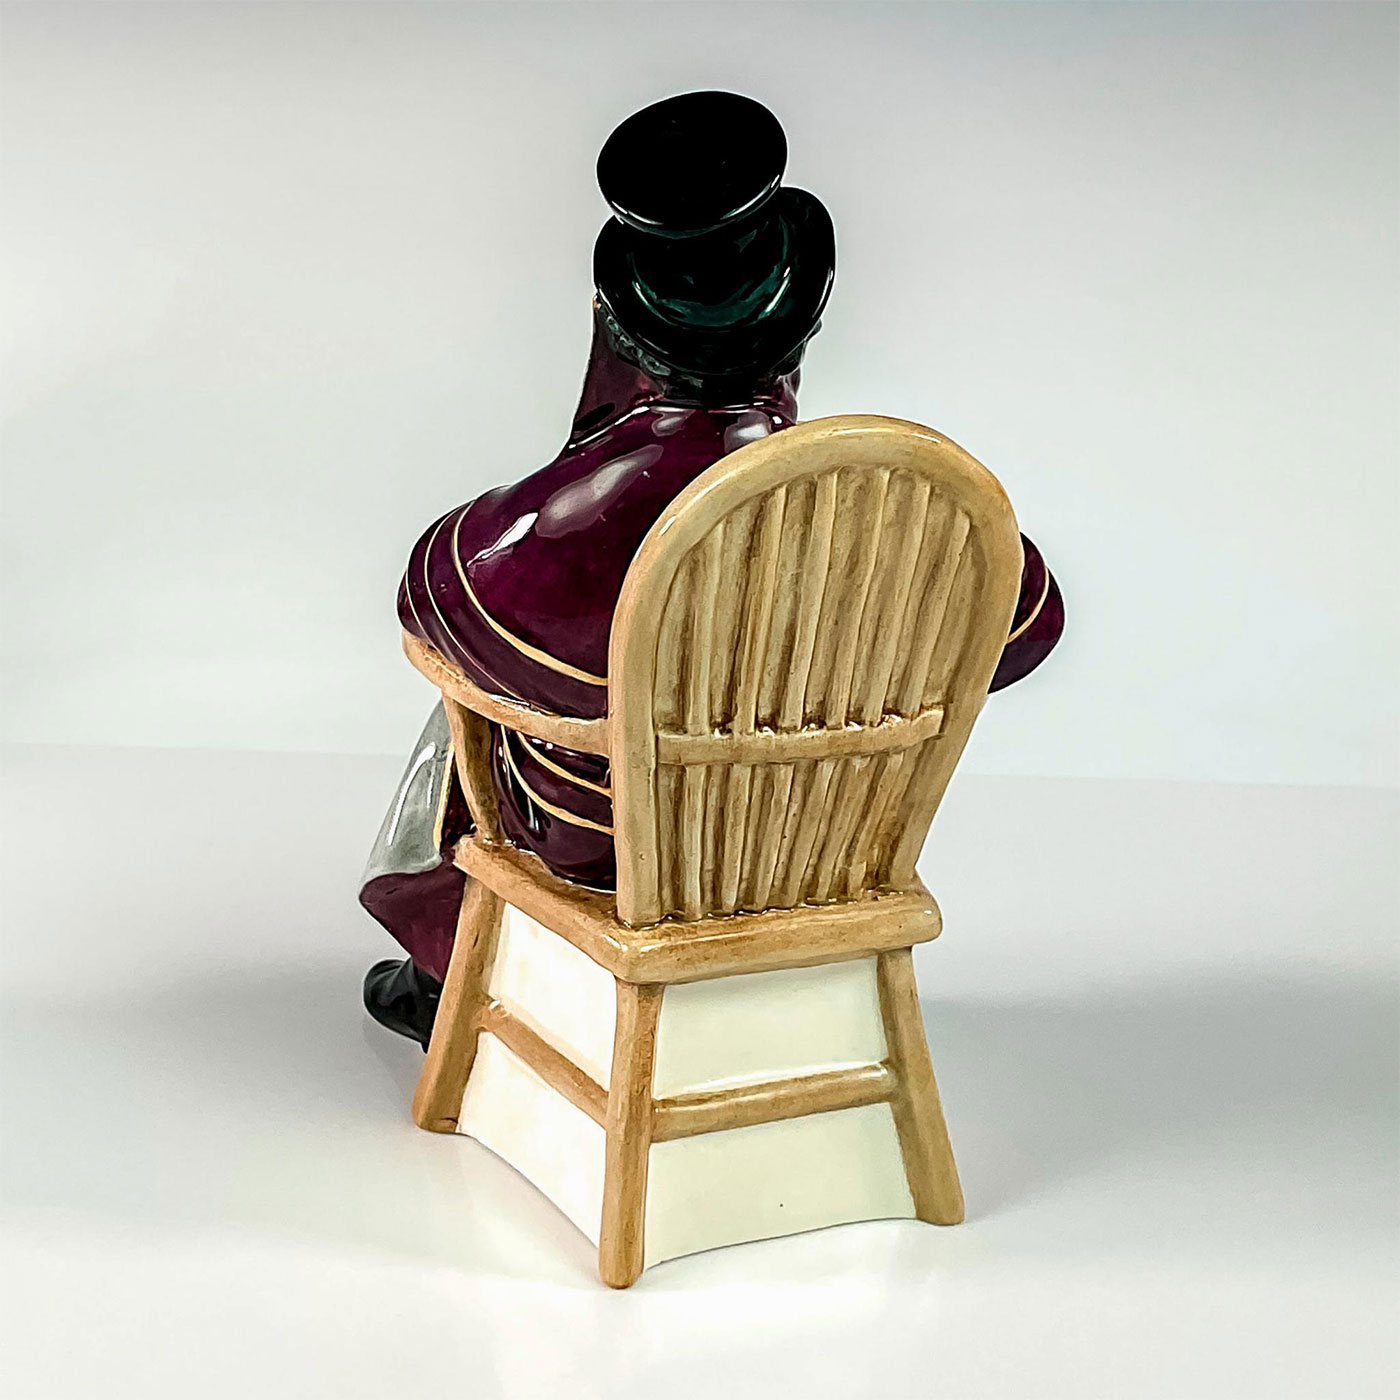 The Coachman - HN2282 - Royal Doulton Figurine - Image 2 of 3